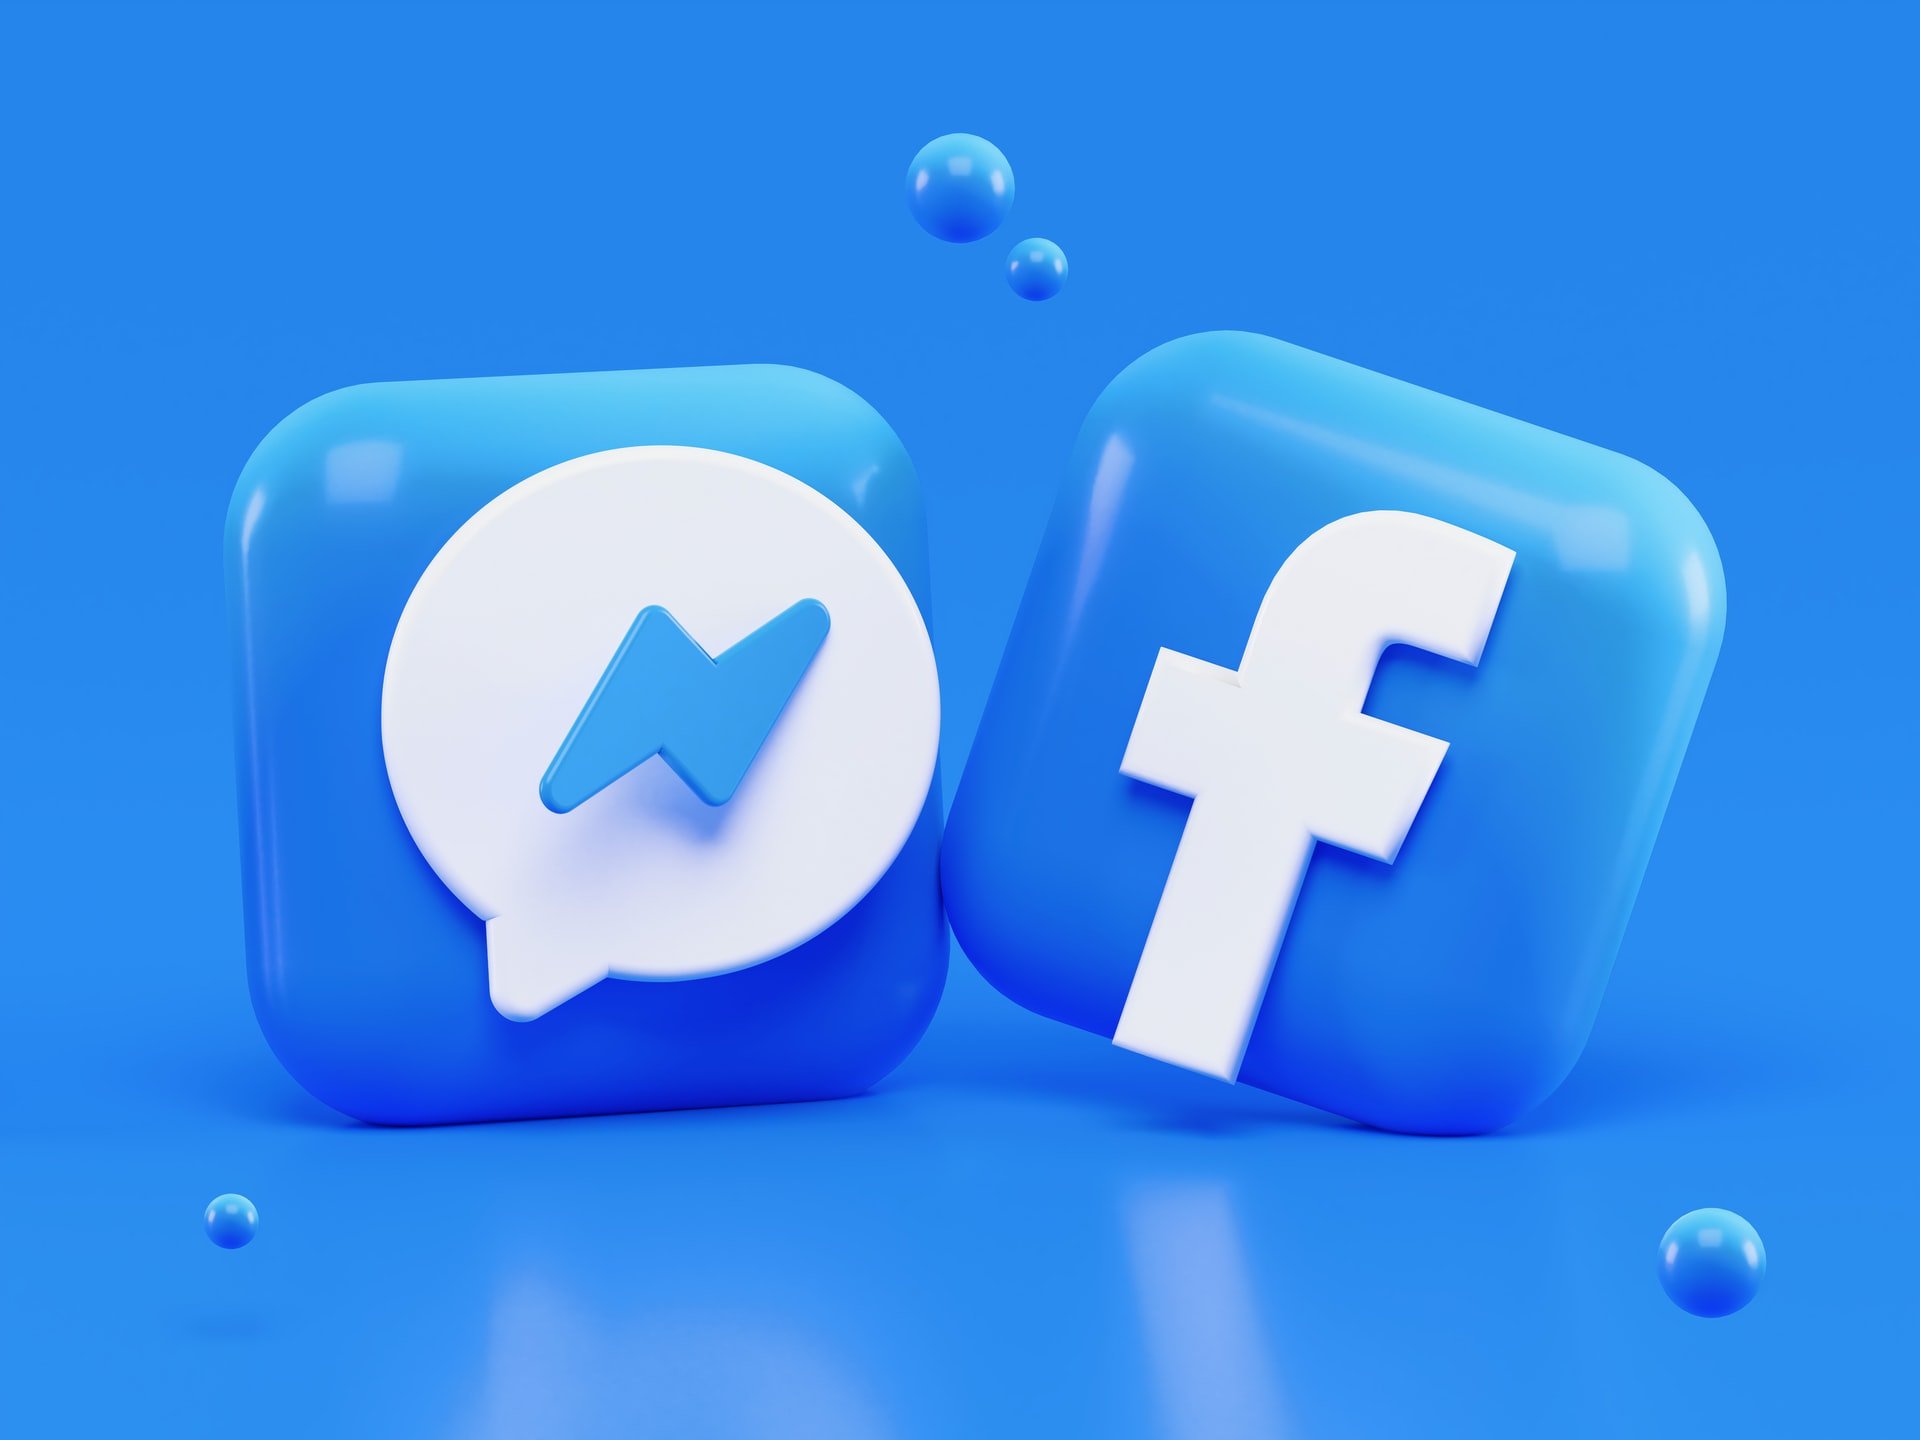 Facebook bubble symbols